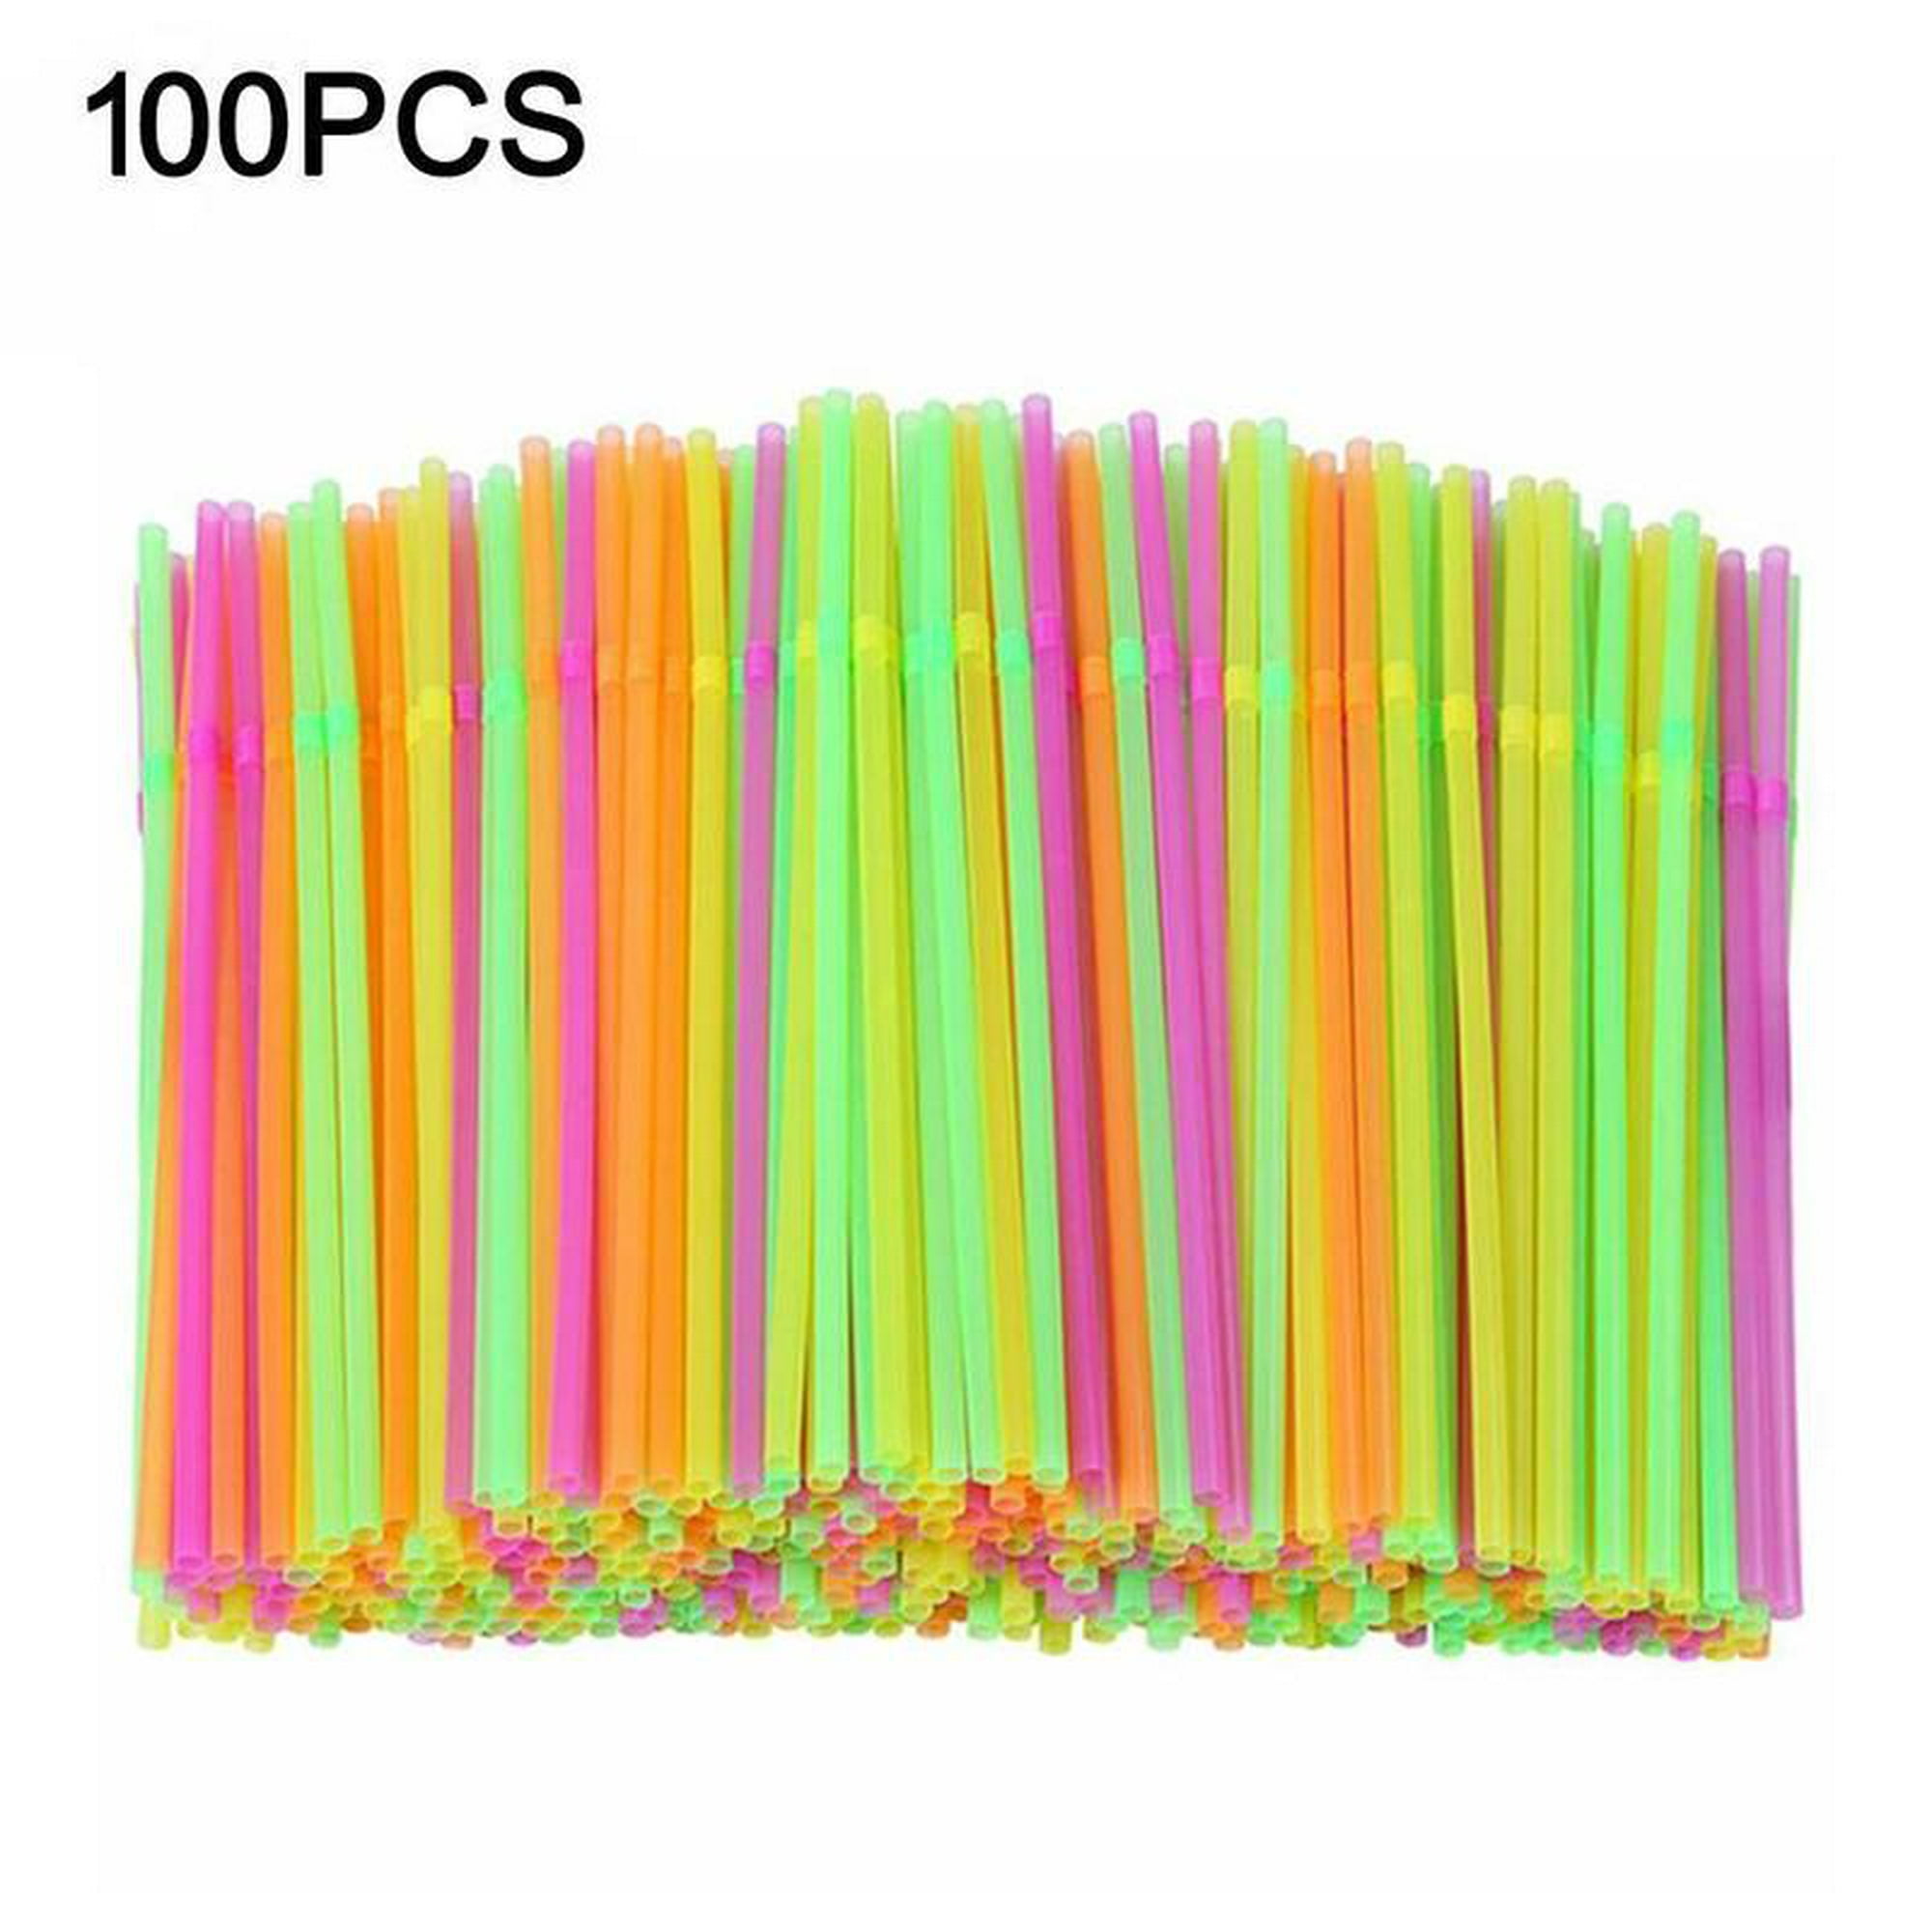 100 pajitas de plástico de colores, pajitas de plástico reutilizables,  pajitas flexibles y flexibles para beber, 5 x 210 mm TUNC Sencillez